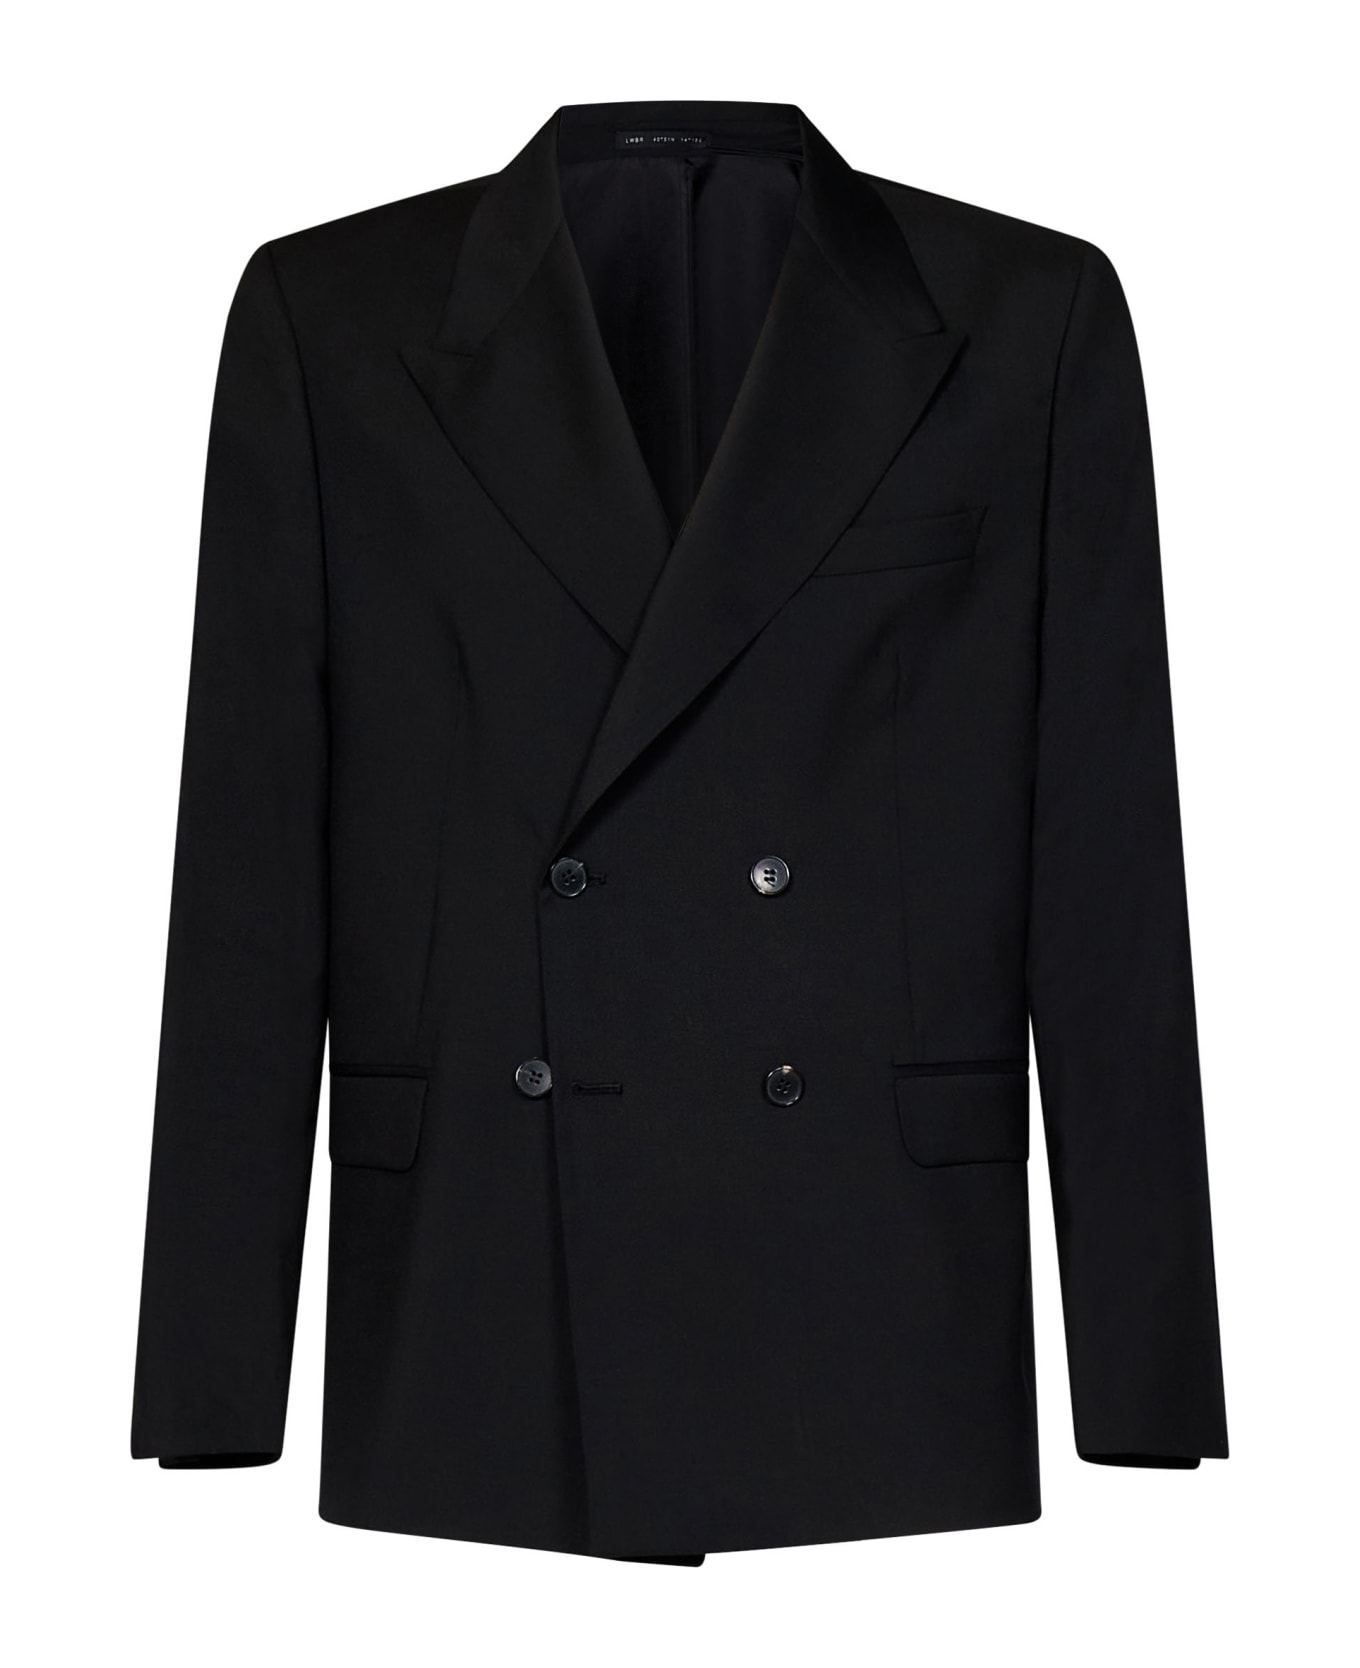 Low Brand 2b Suit - Black スーツ